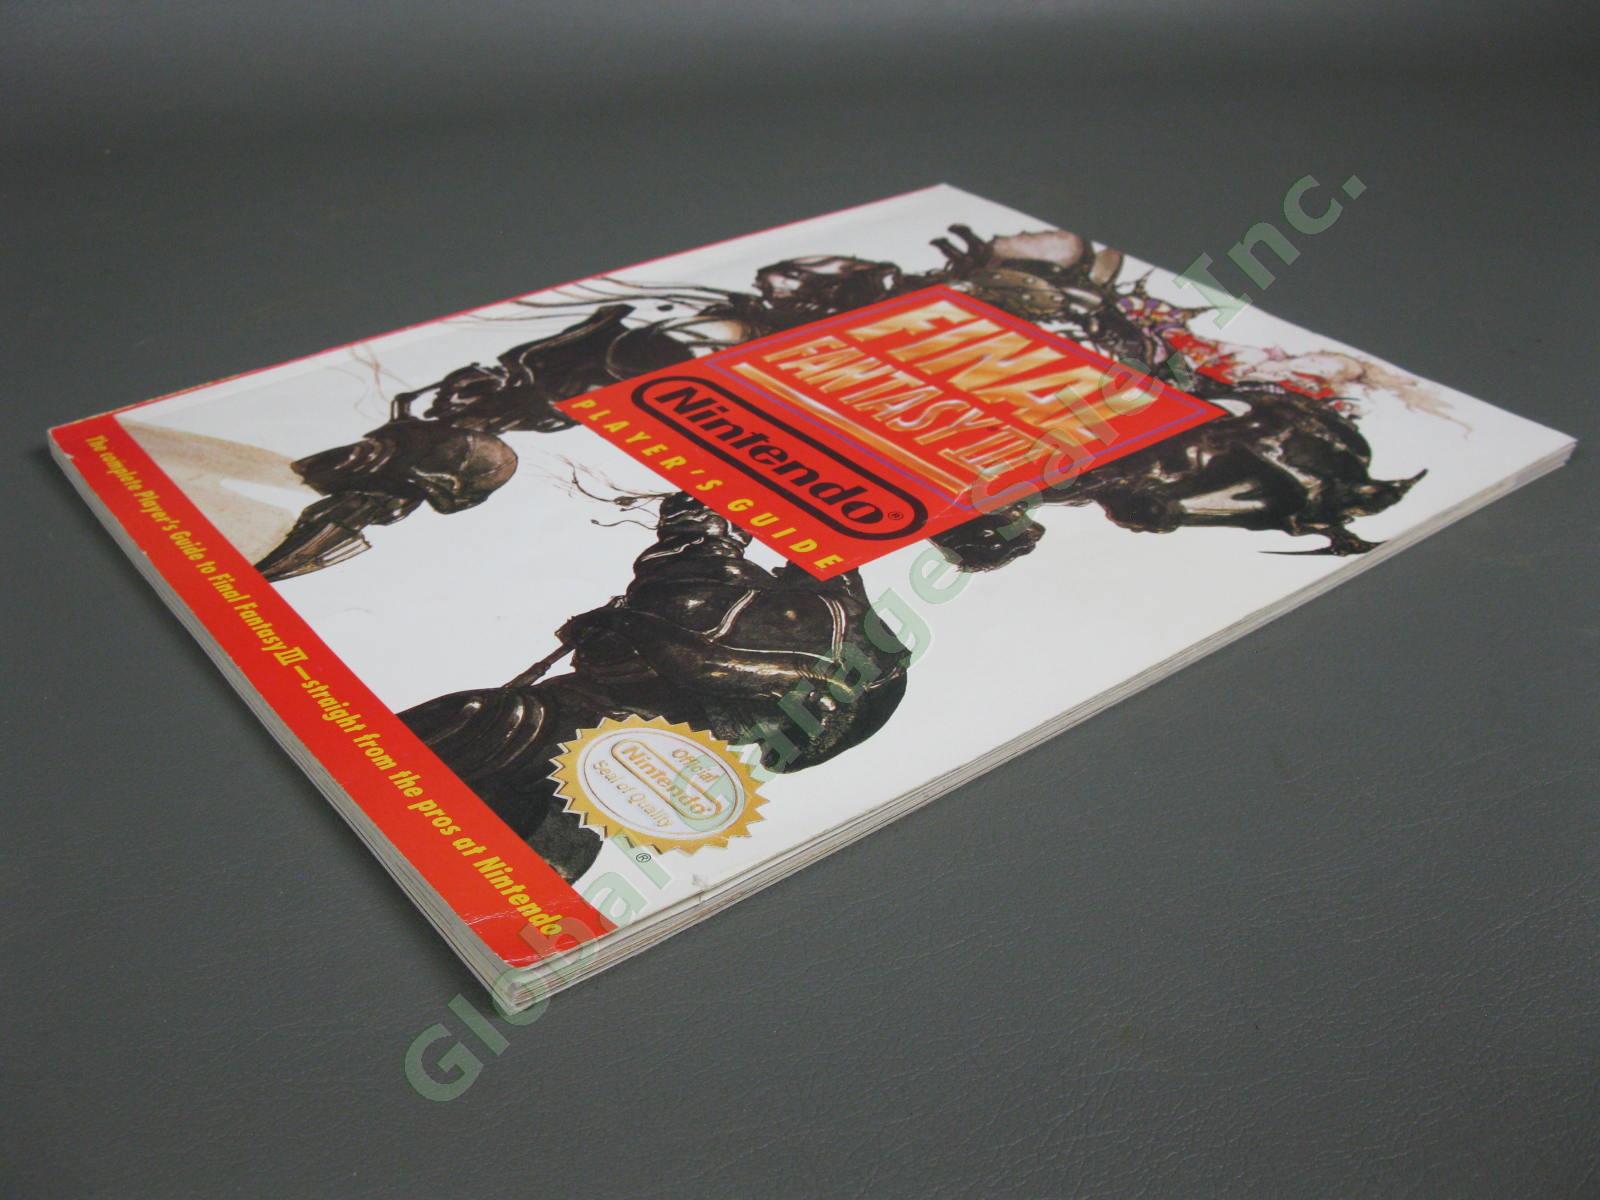 1994 Nintendo Final Fantasy III 3 Players Guide Gaming Manual Strategy Book NR 2